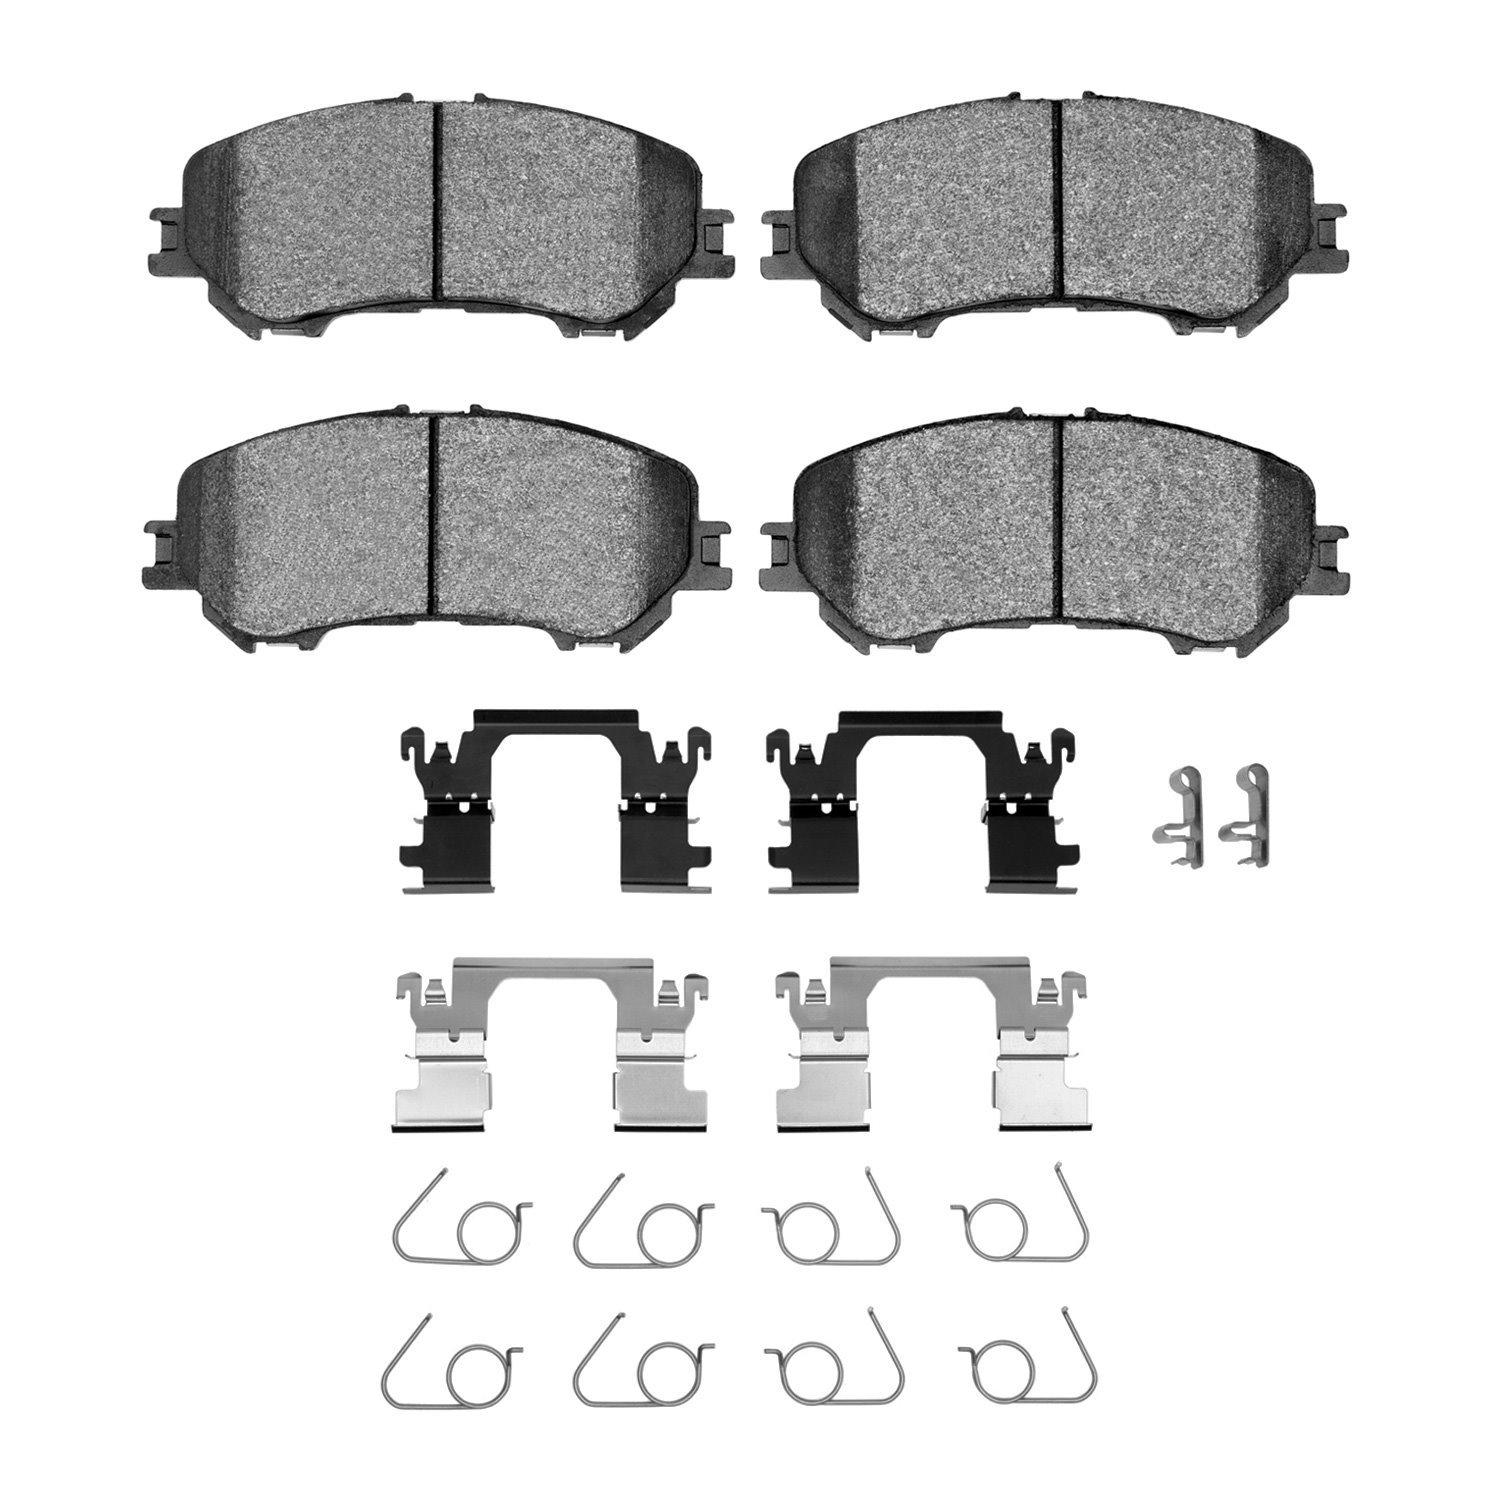 1310-1737-01 3000-Series Ceramic Brake Pads & Hardware Kit, Fits Select Multiple Makes/Models, Position: Front